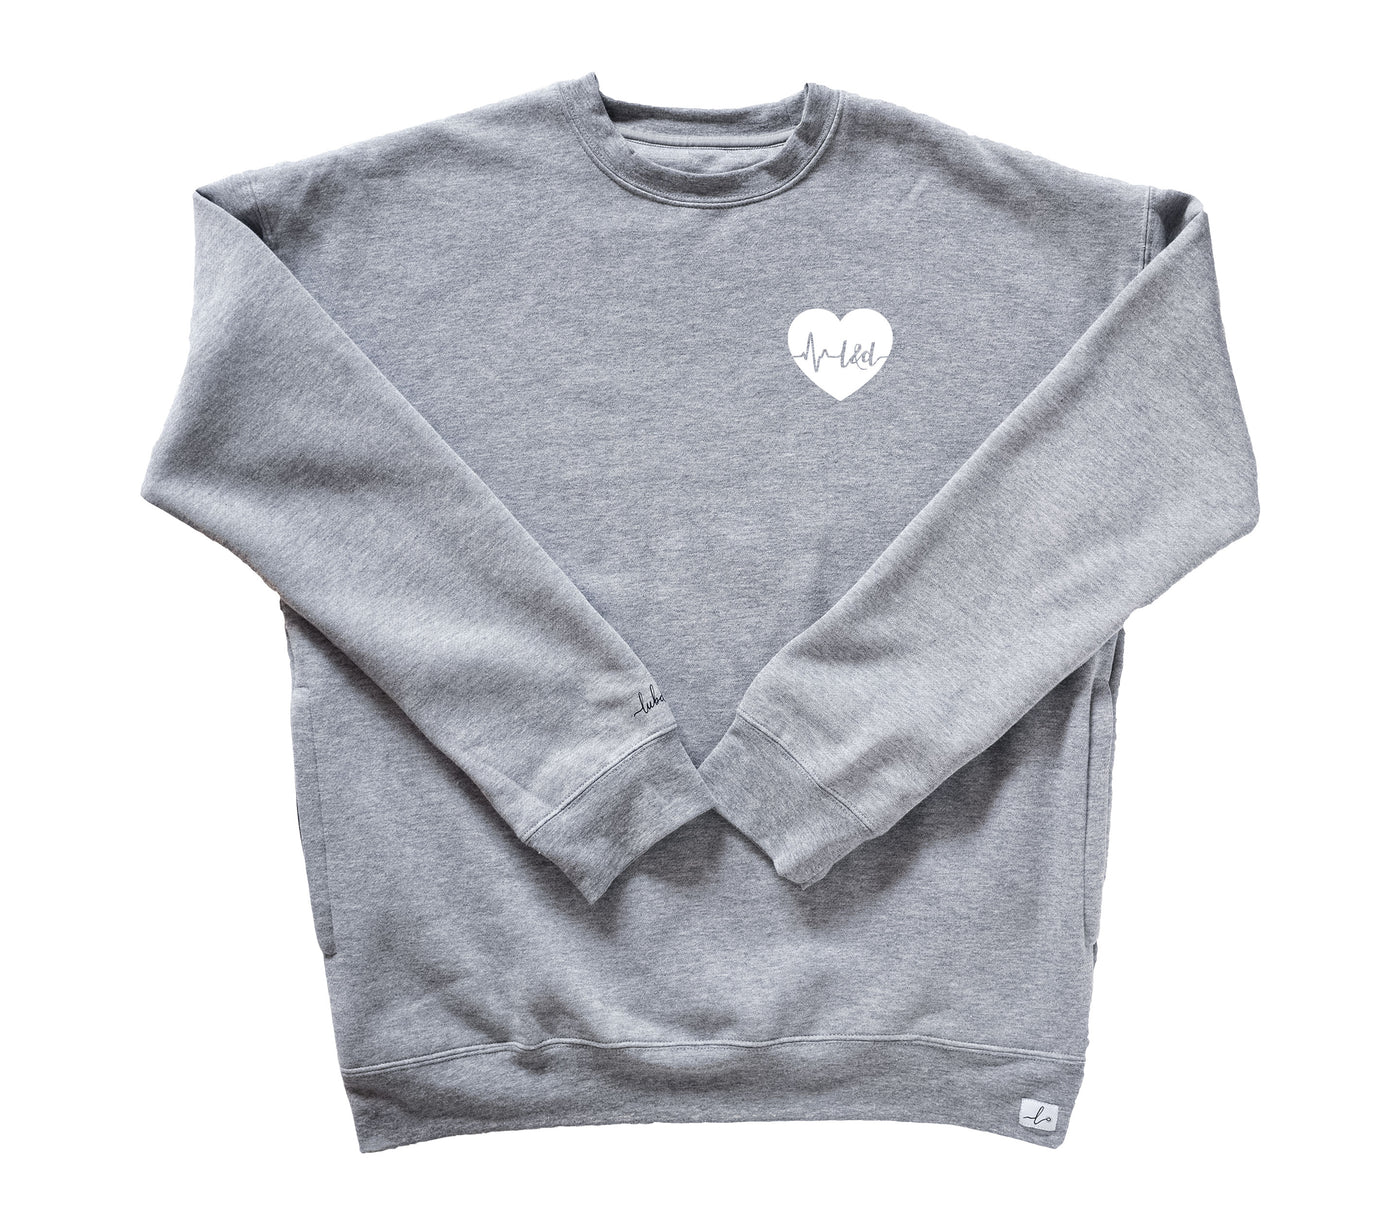 L&D ECG Heart - Pocketed Crew Sweatshirt